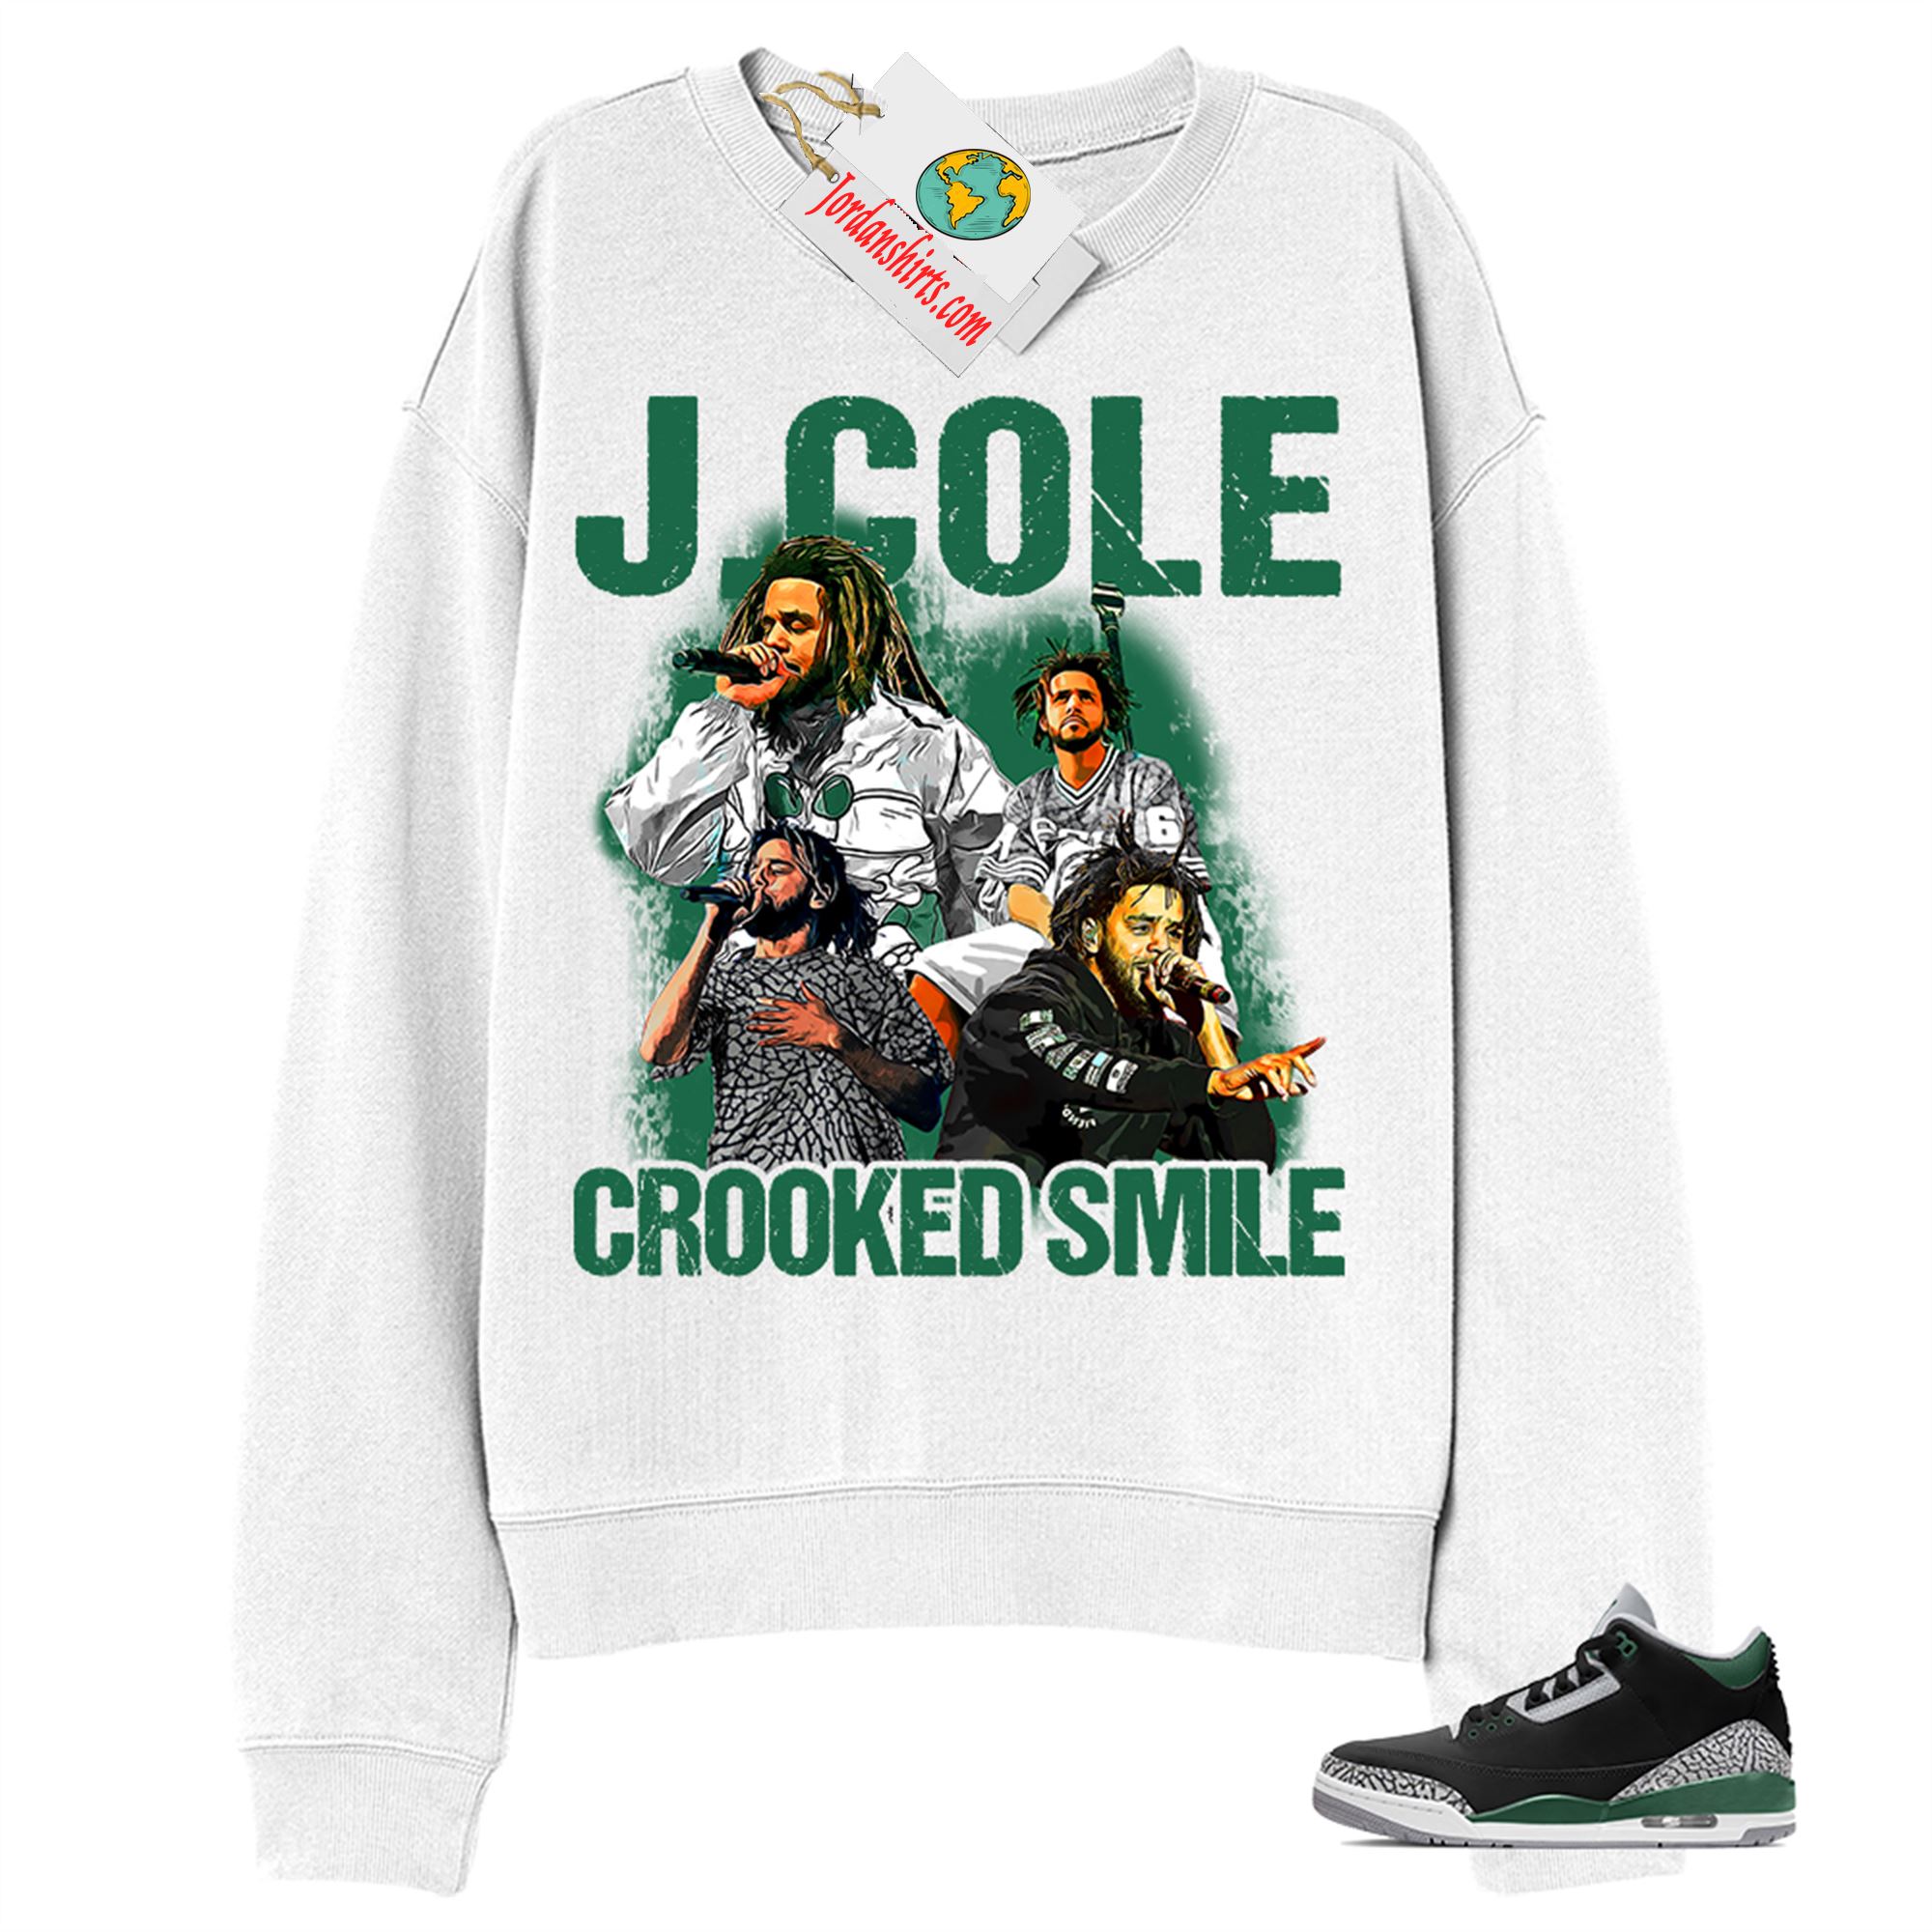 Jordan 3 Sweatshirt, J Cole Bootleg Vintage Raptee White Sweatshirt Air Jordan 3 Pine Green 3s Full Size Up To 5xl